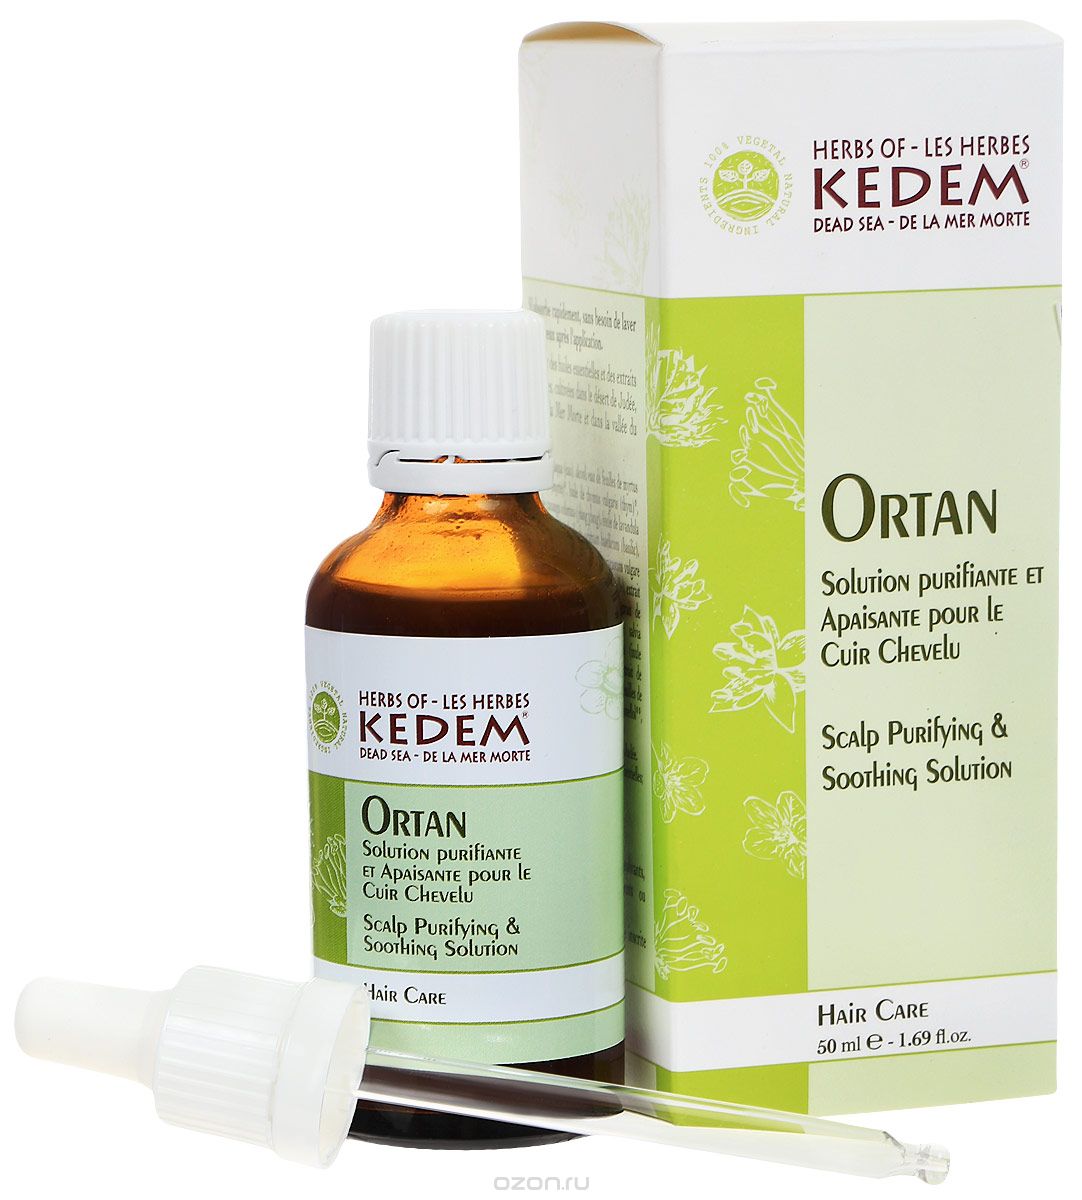 ORTAN - Scalp cleanser for stronger hair - Kedem Herbs Canada